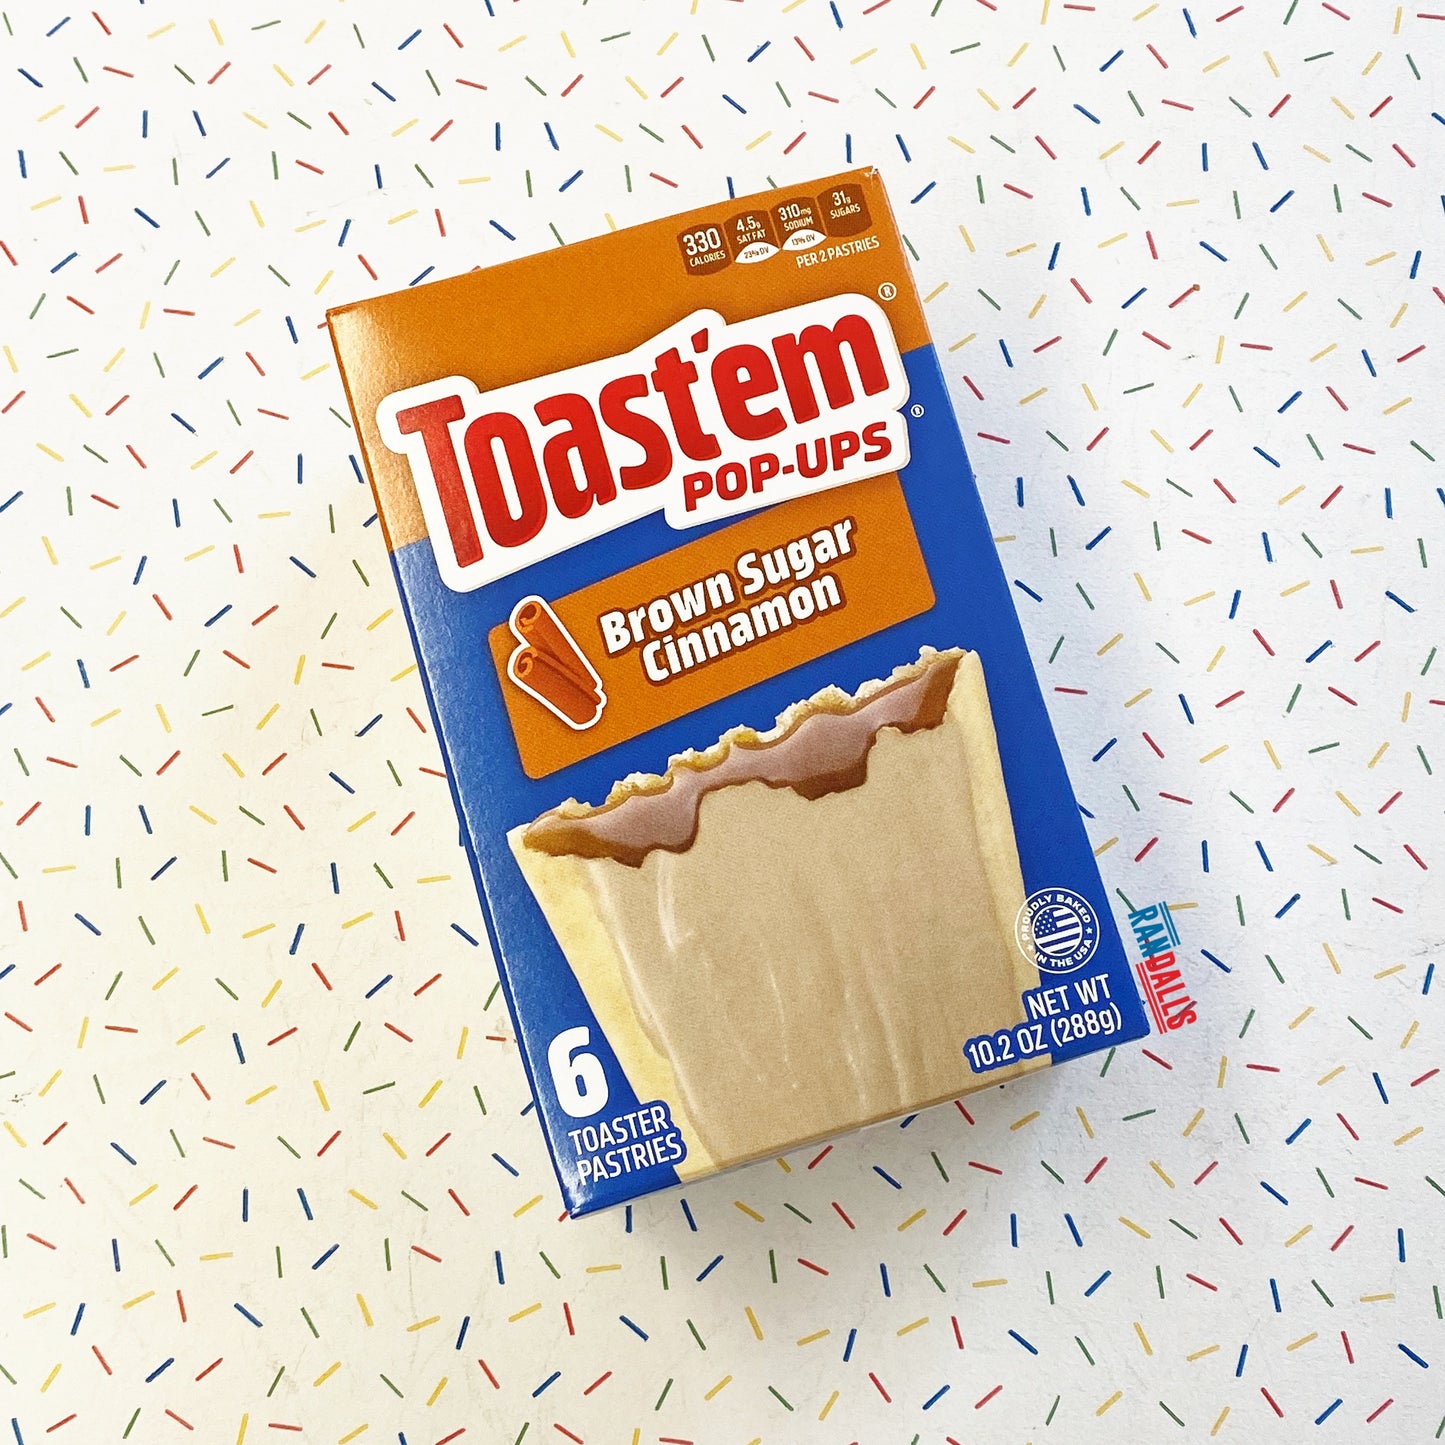 toast'em pop-ups brown sugar, pop tarts, breakfast, snack, hot pocket